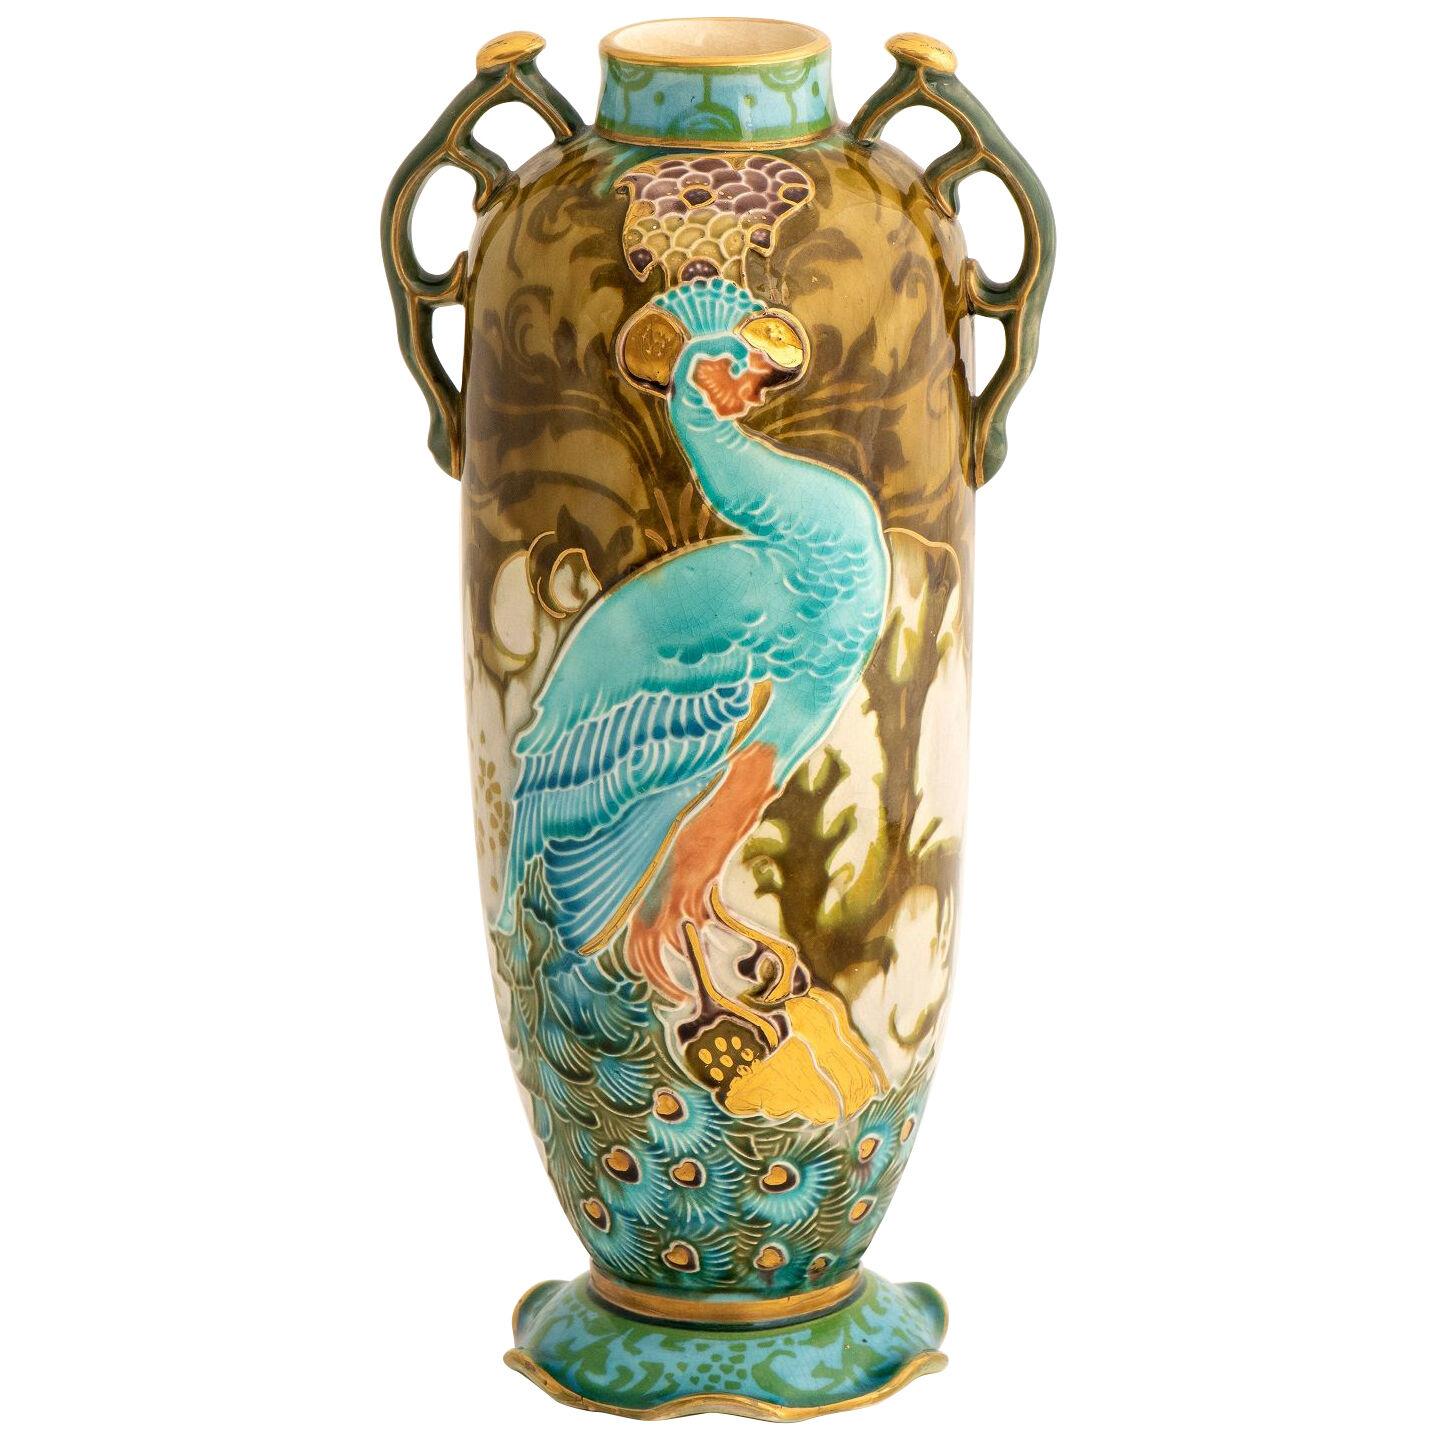 A ceramic Vase by Mintons, England circa 1908